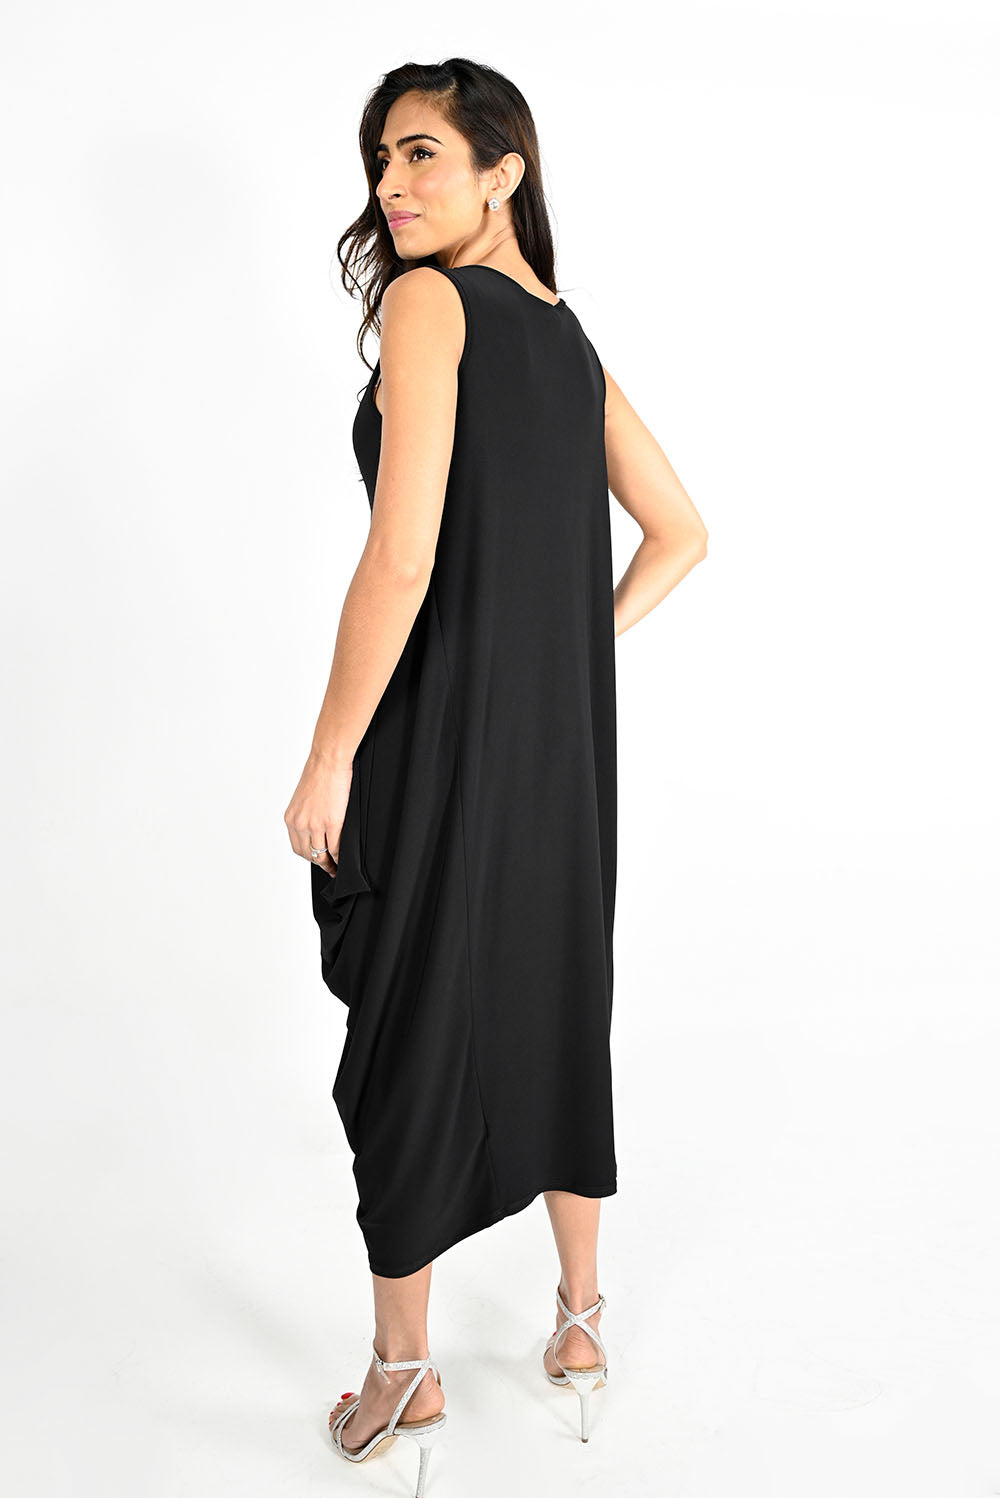 Frank Lyman Knit Dress Style 221023